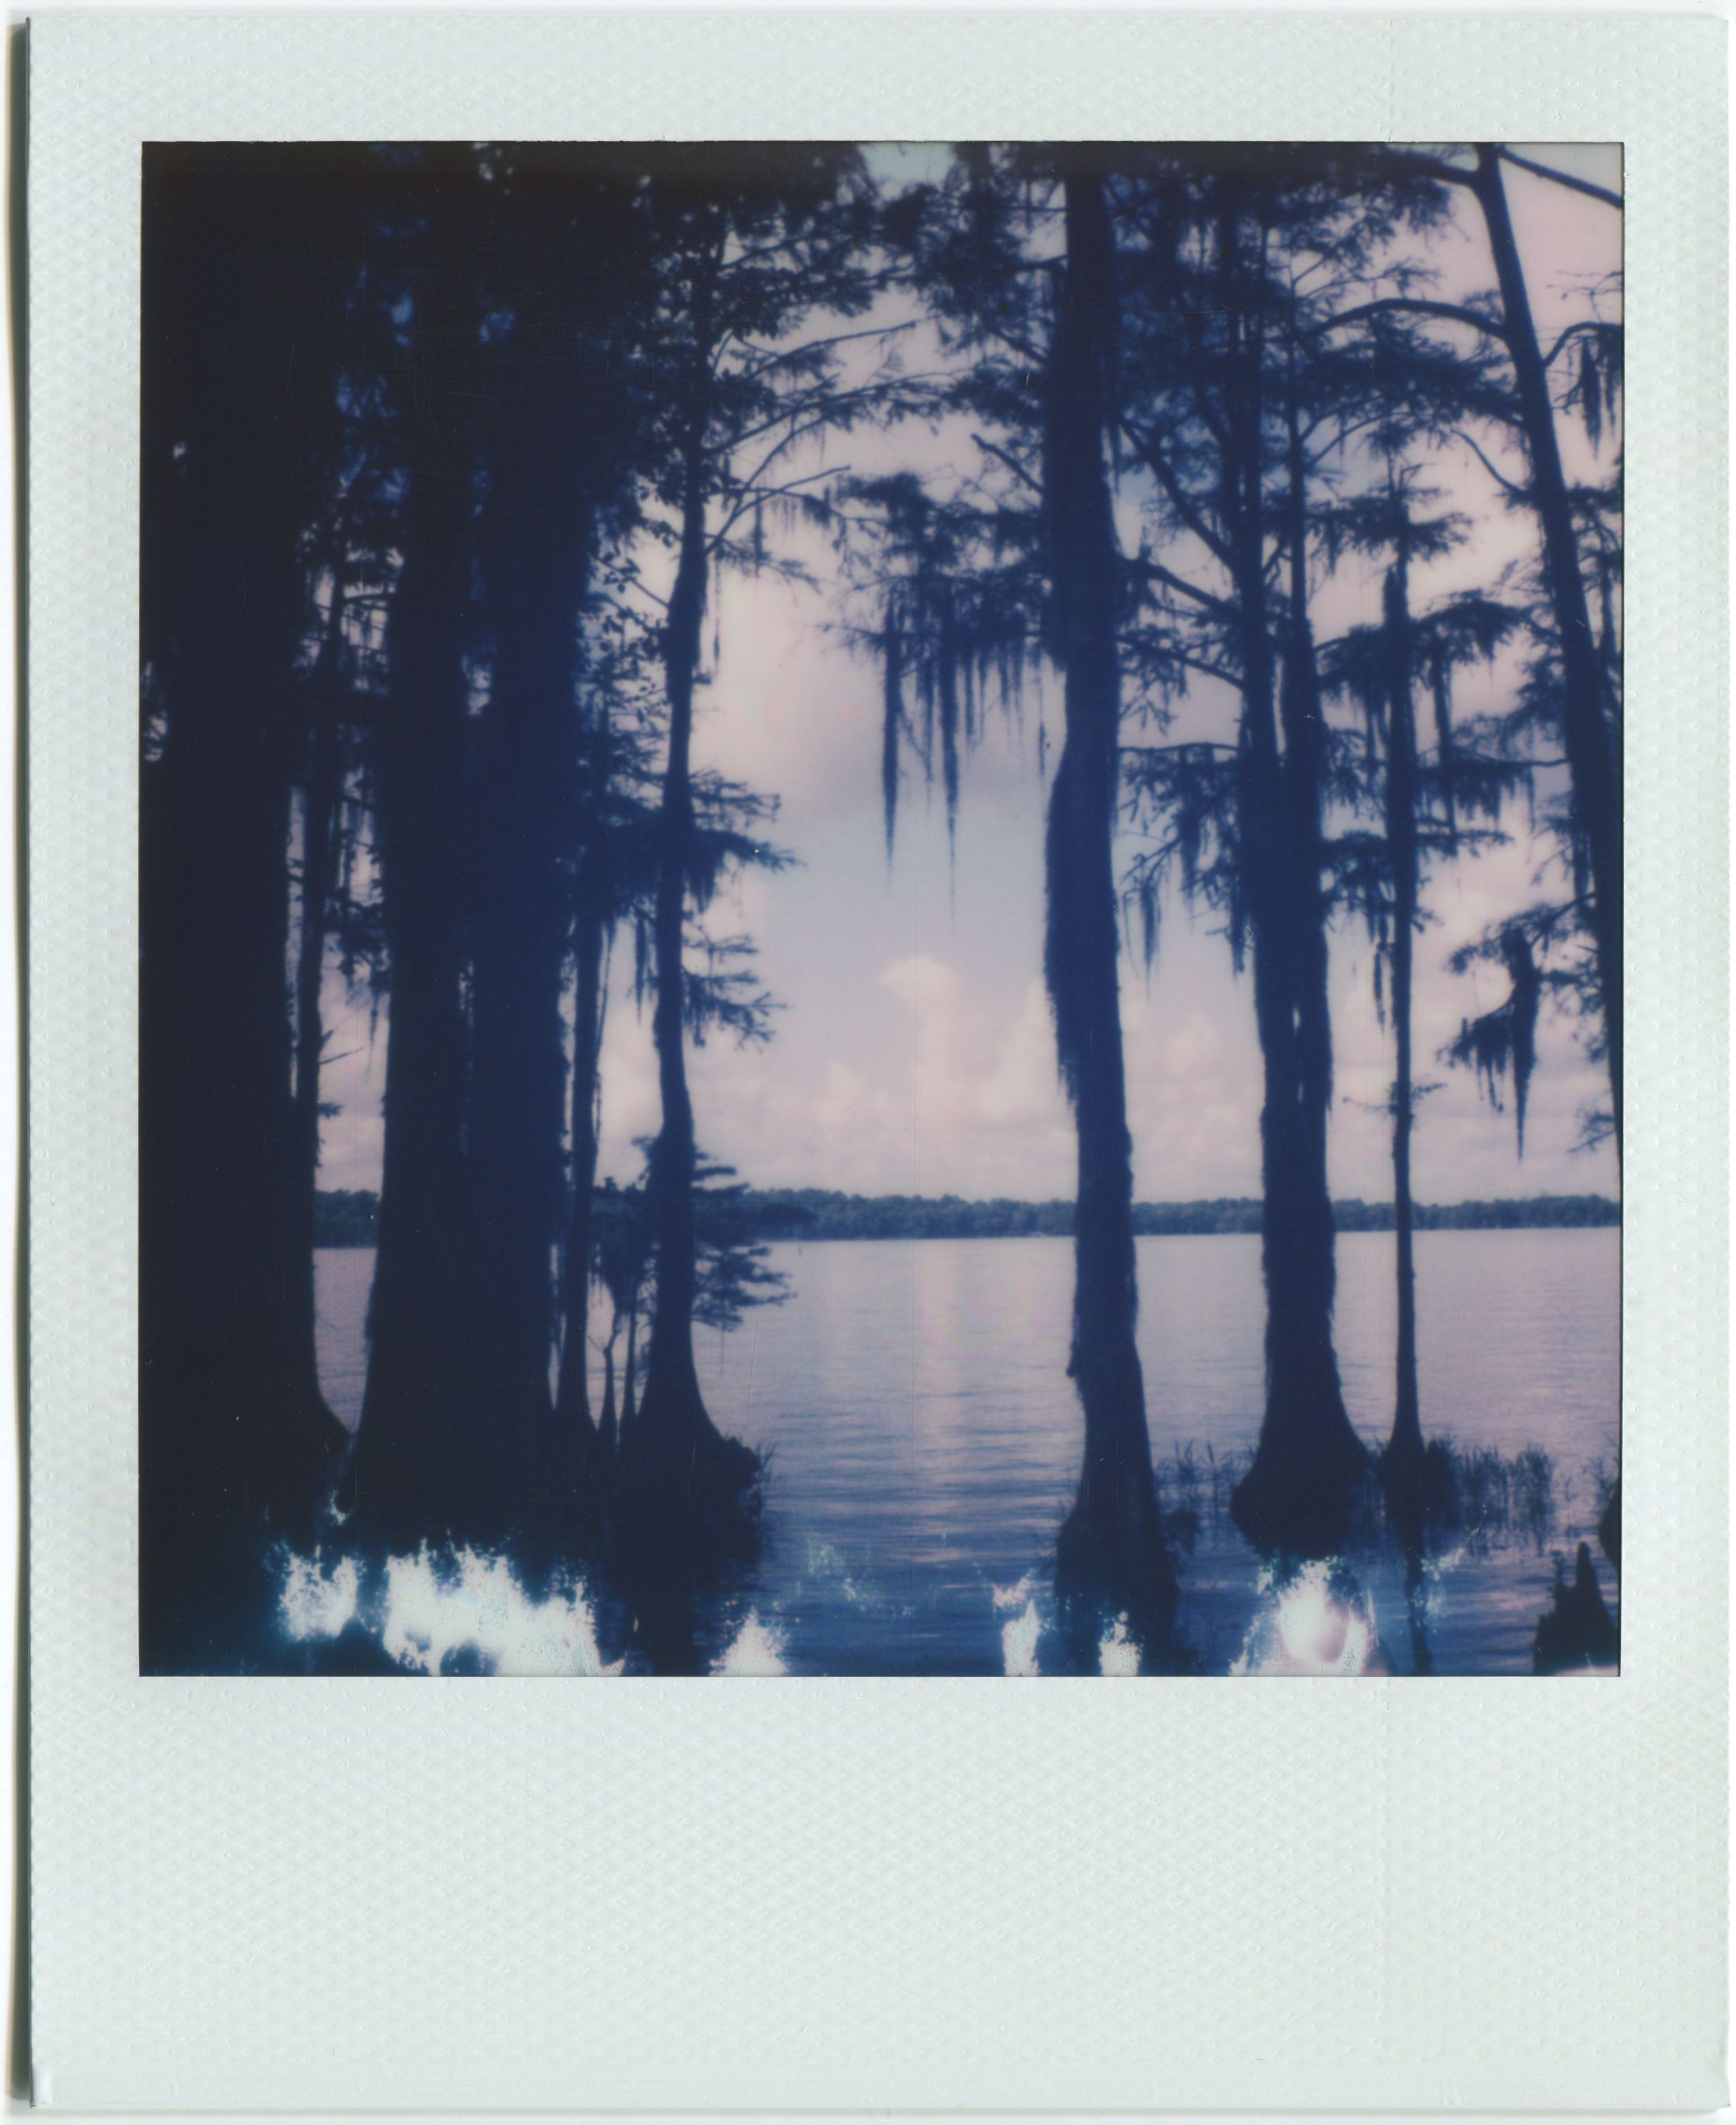 Florala, Alabama / Polaroid 600